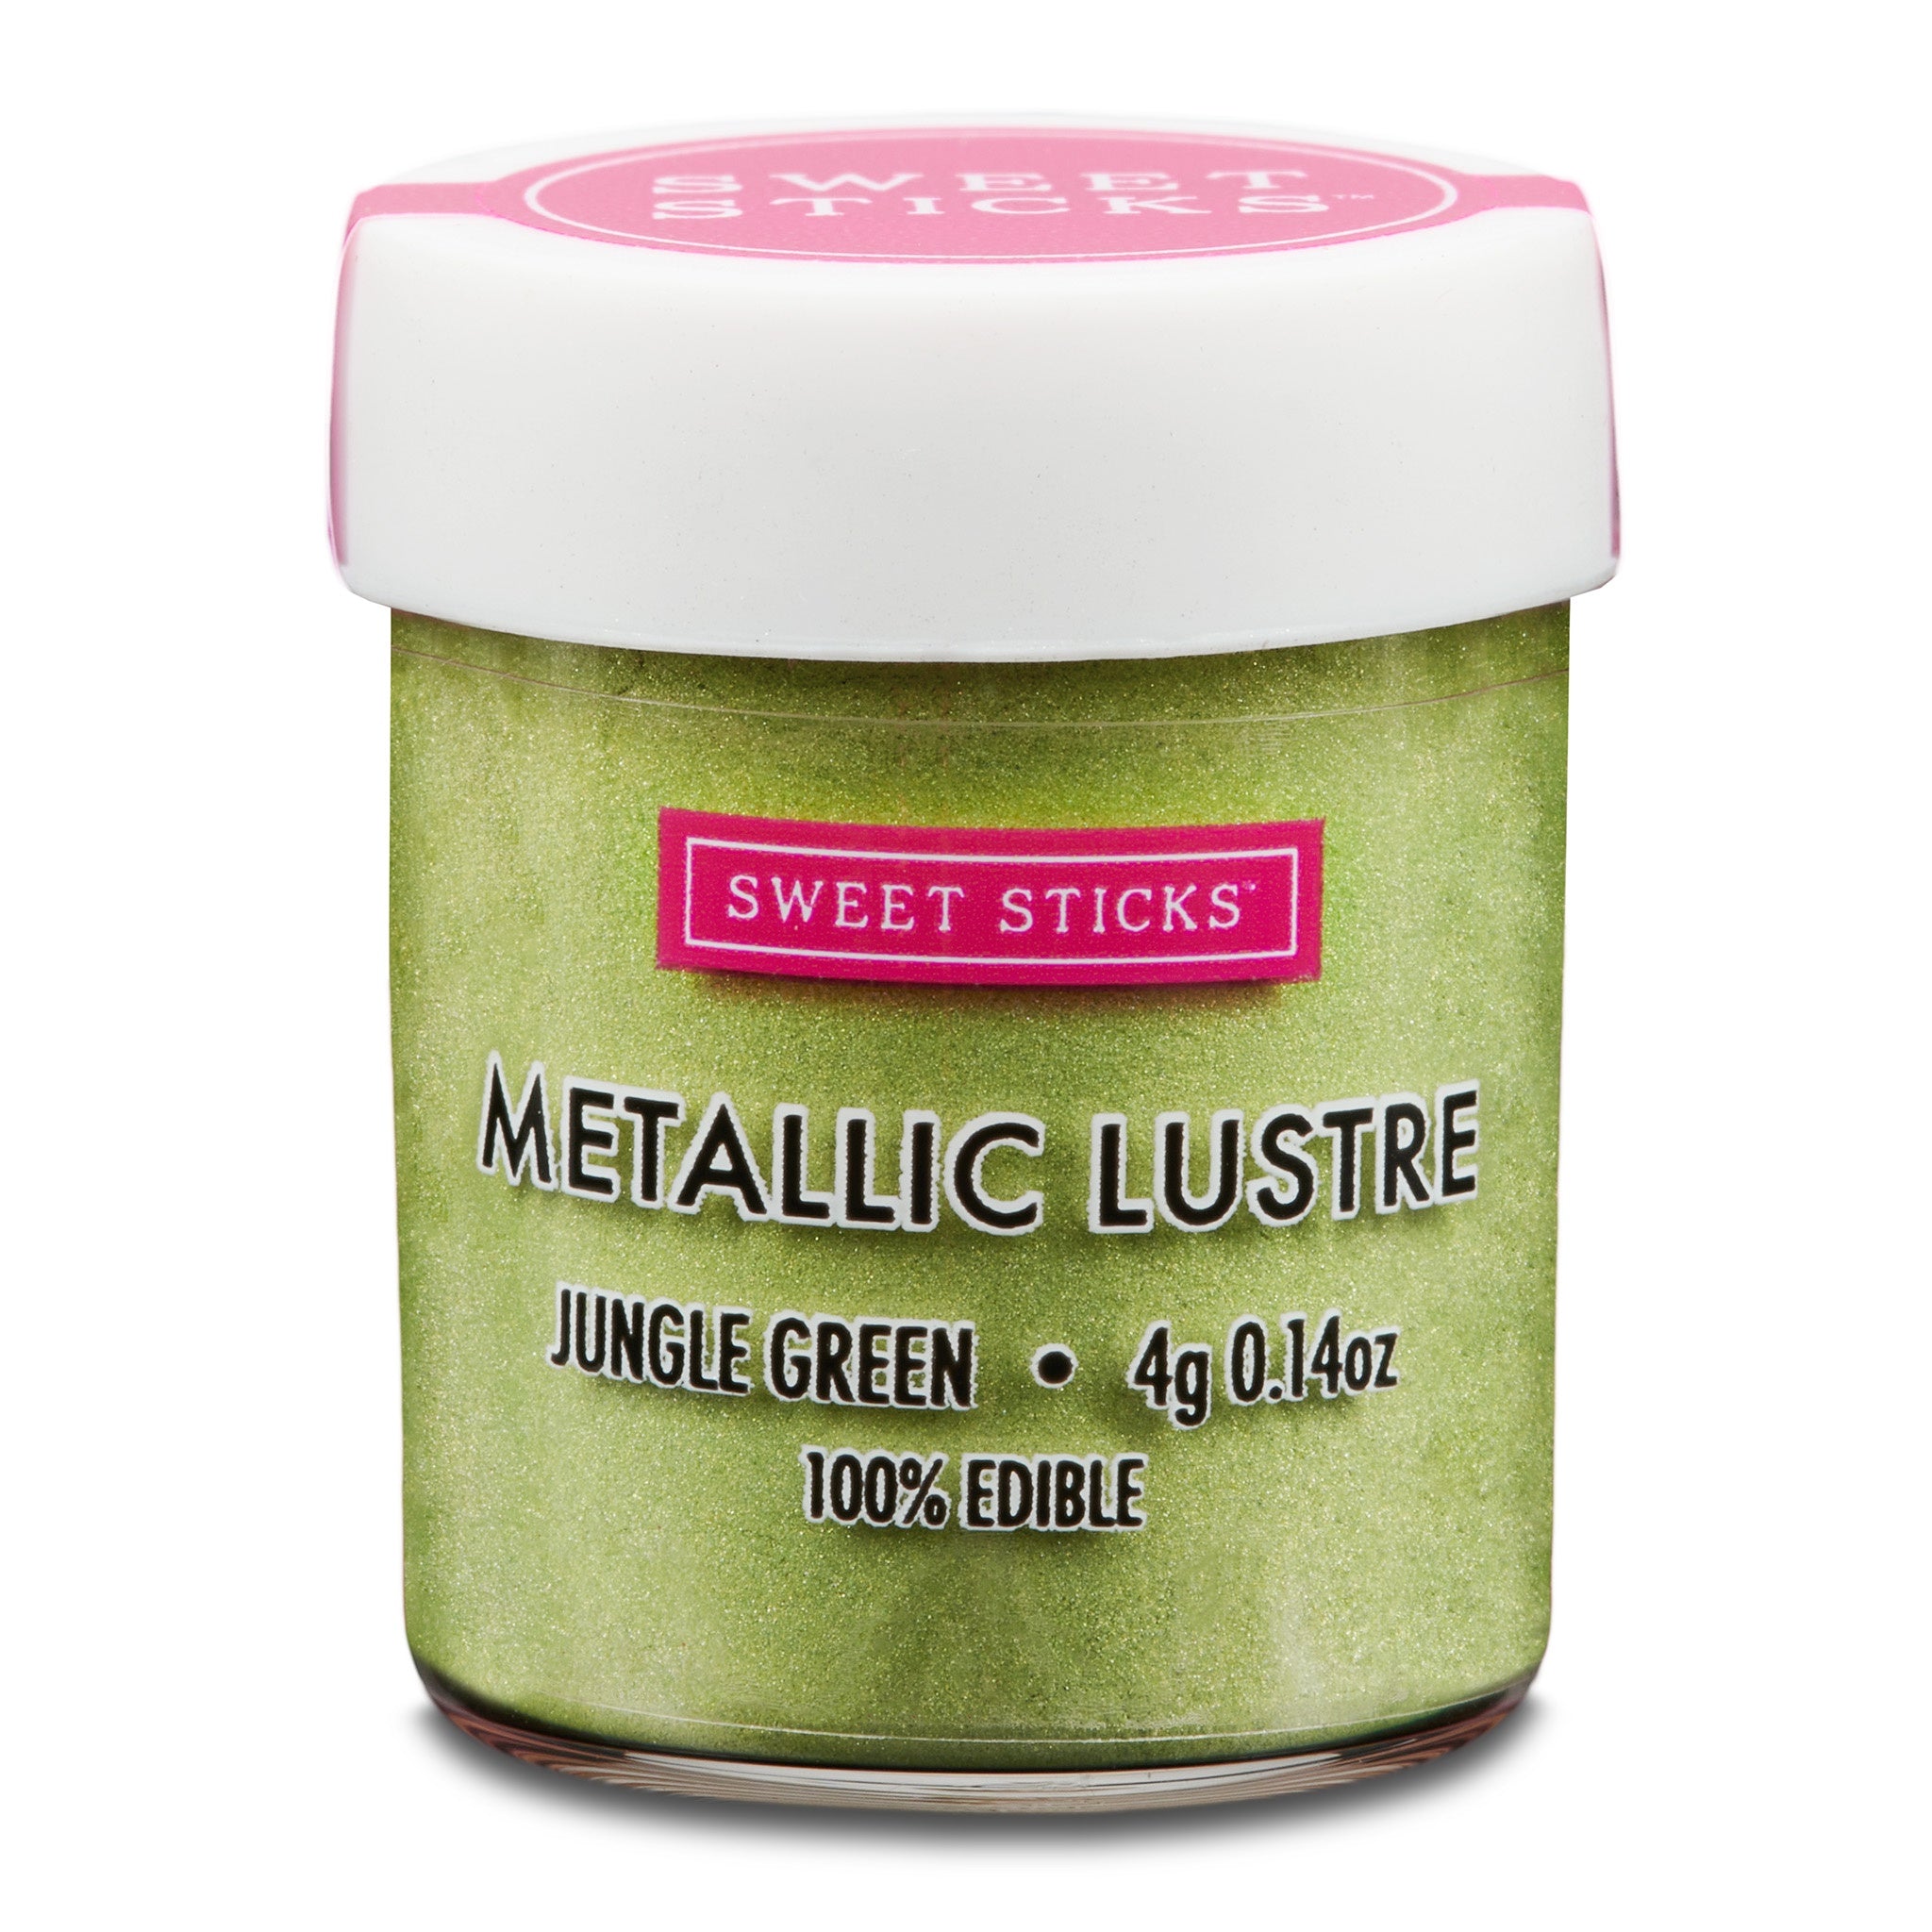 Sweet Sticks Metallic Lustre 4g - Jungle Green